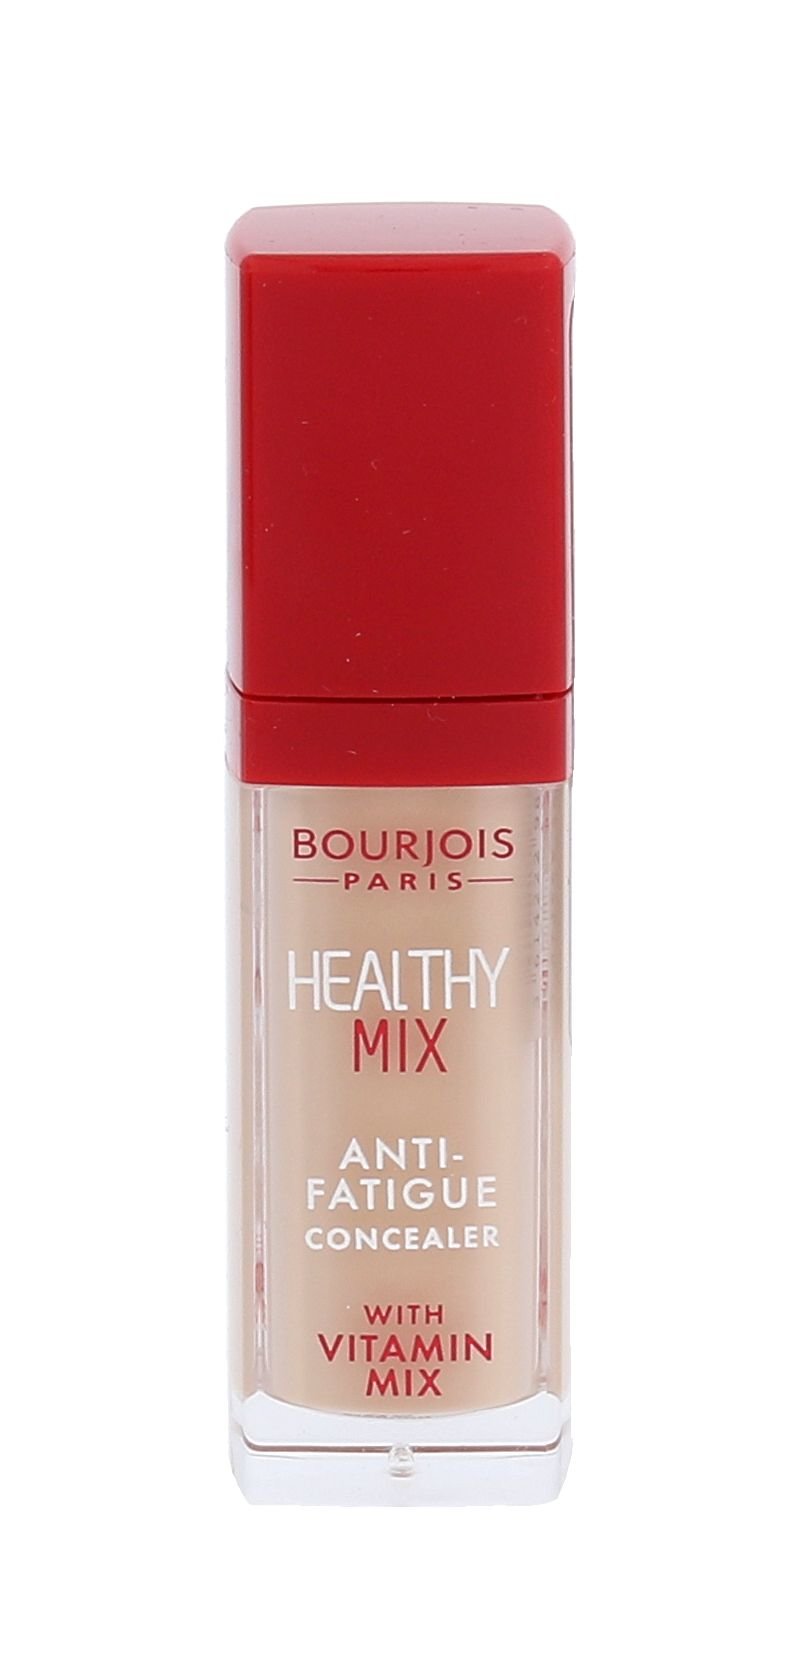 BOURJOIS Paris Healthy Mix Anti-Fatigue Concealer